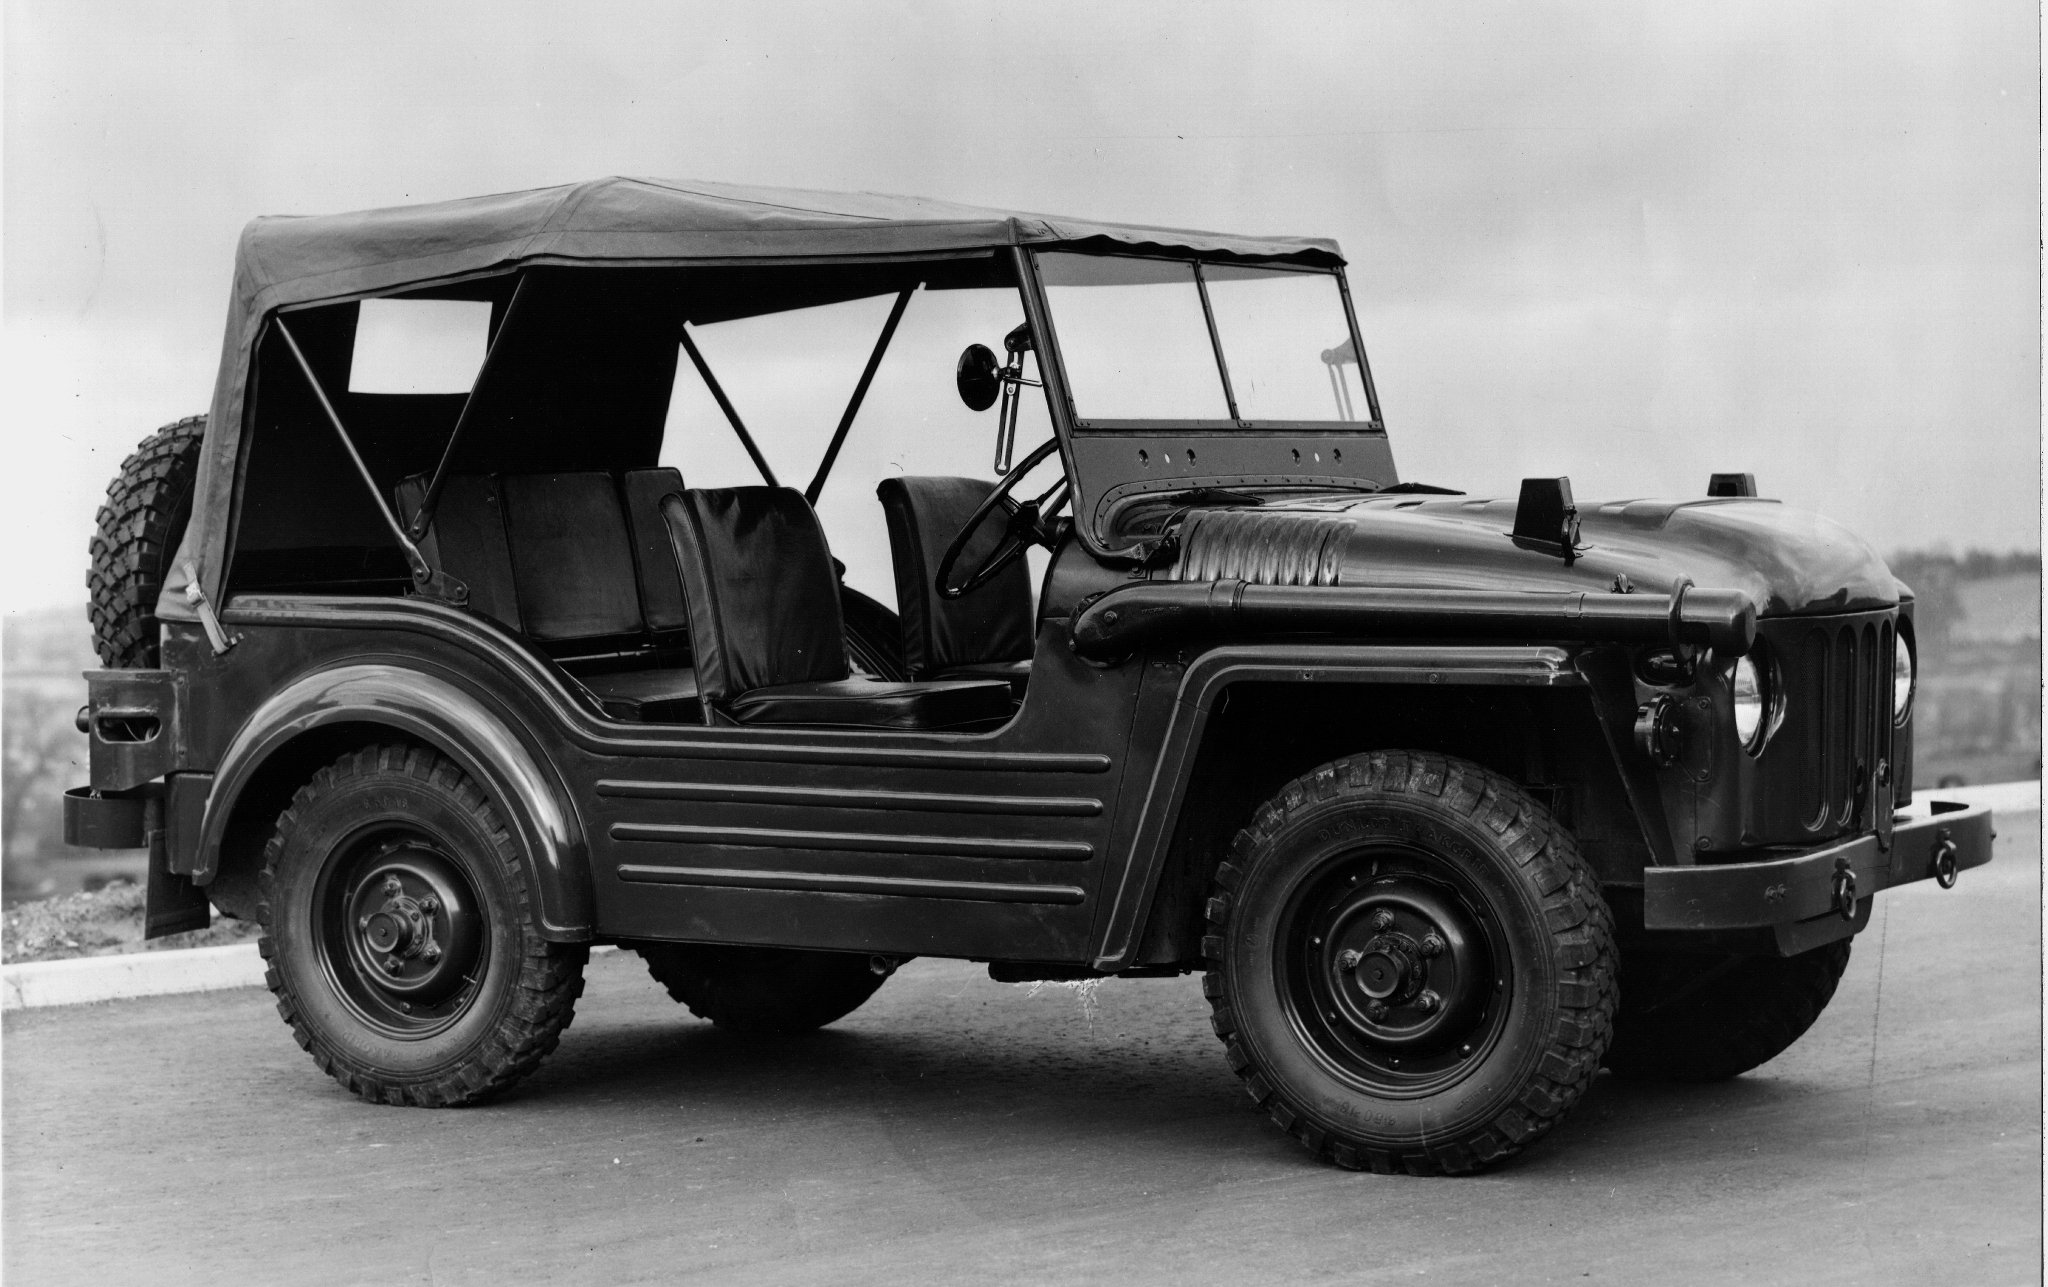 Austin Champ military vehicle